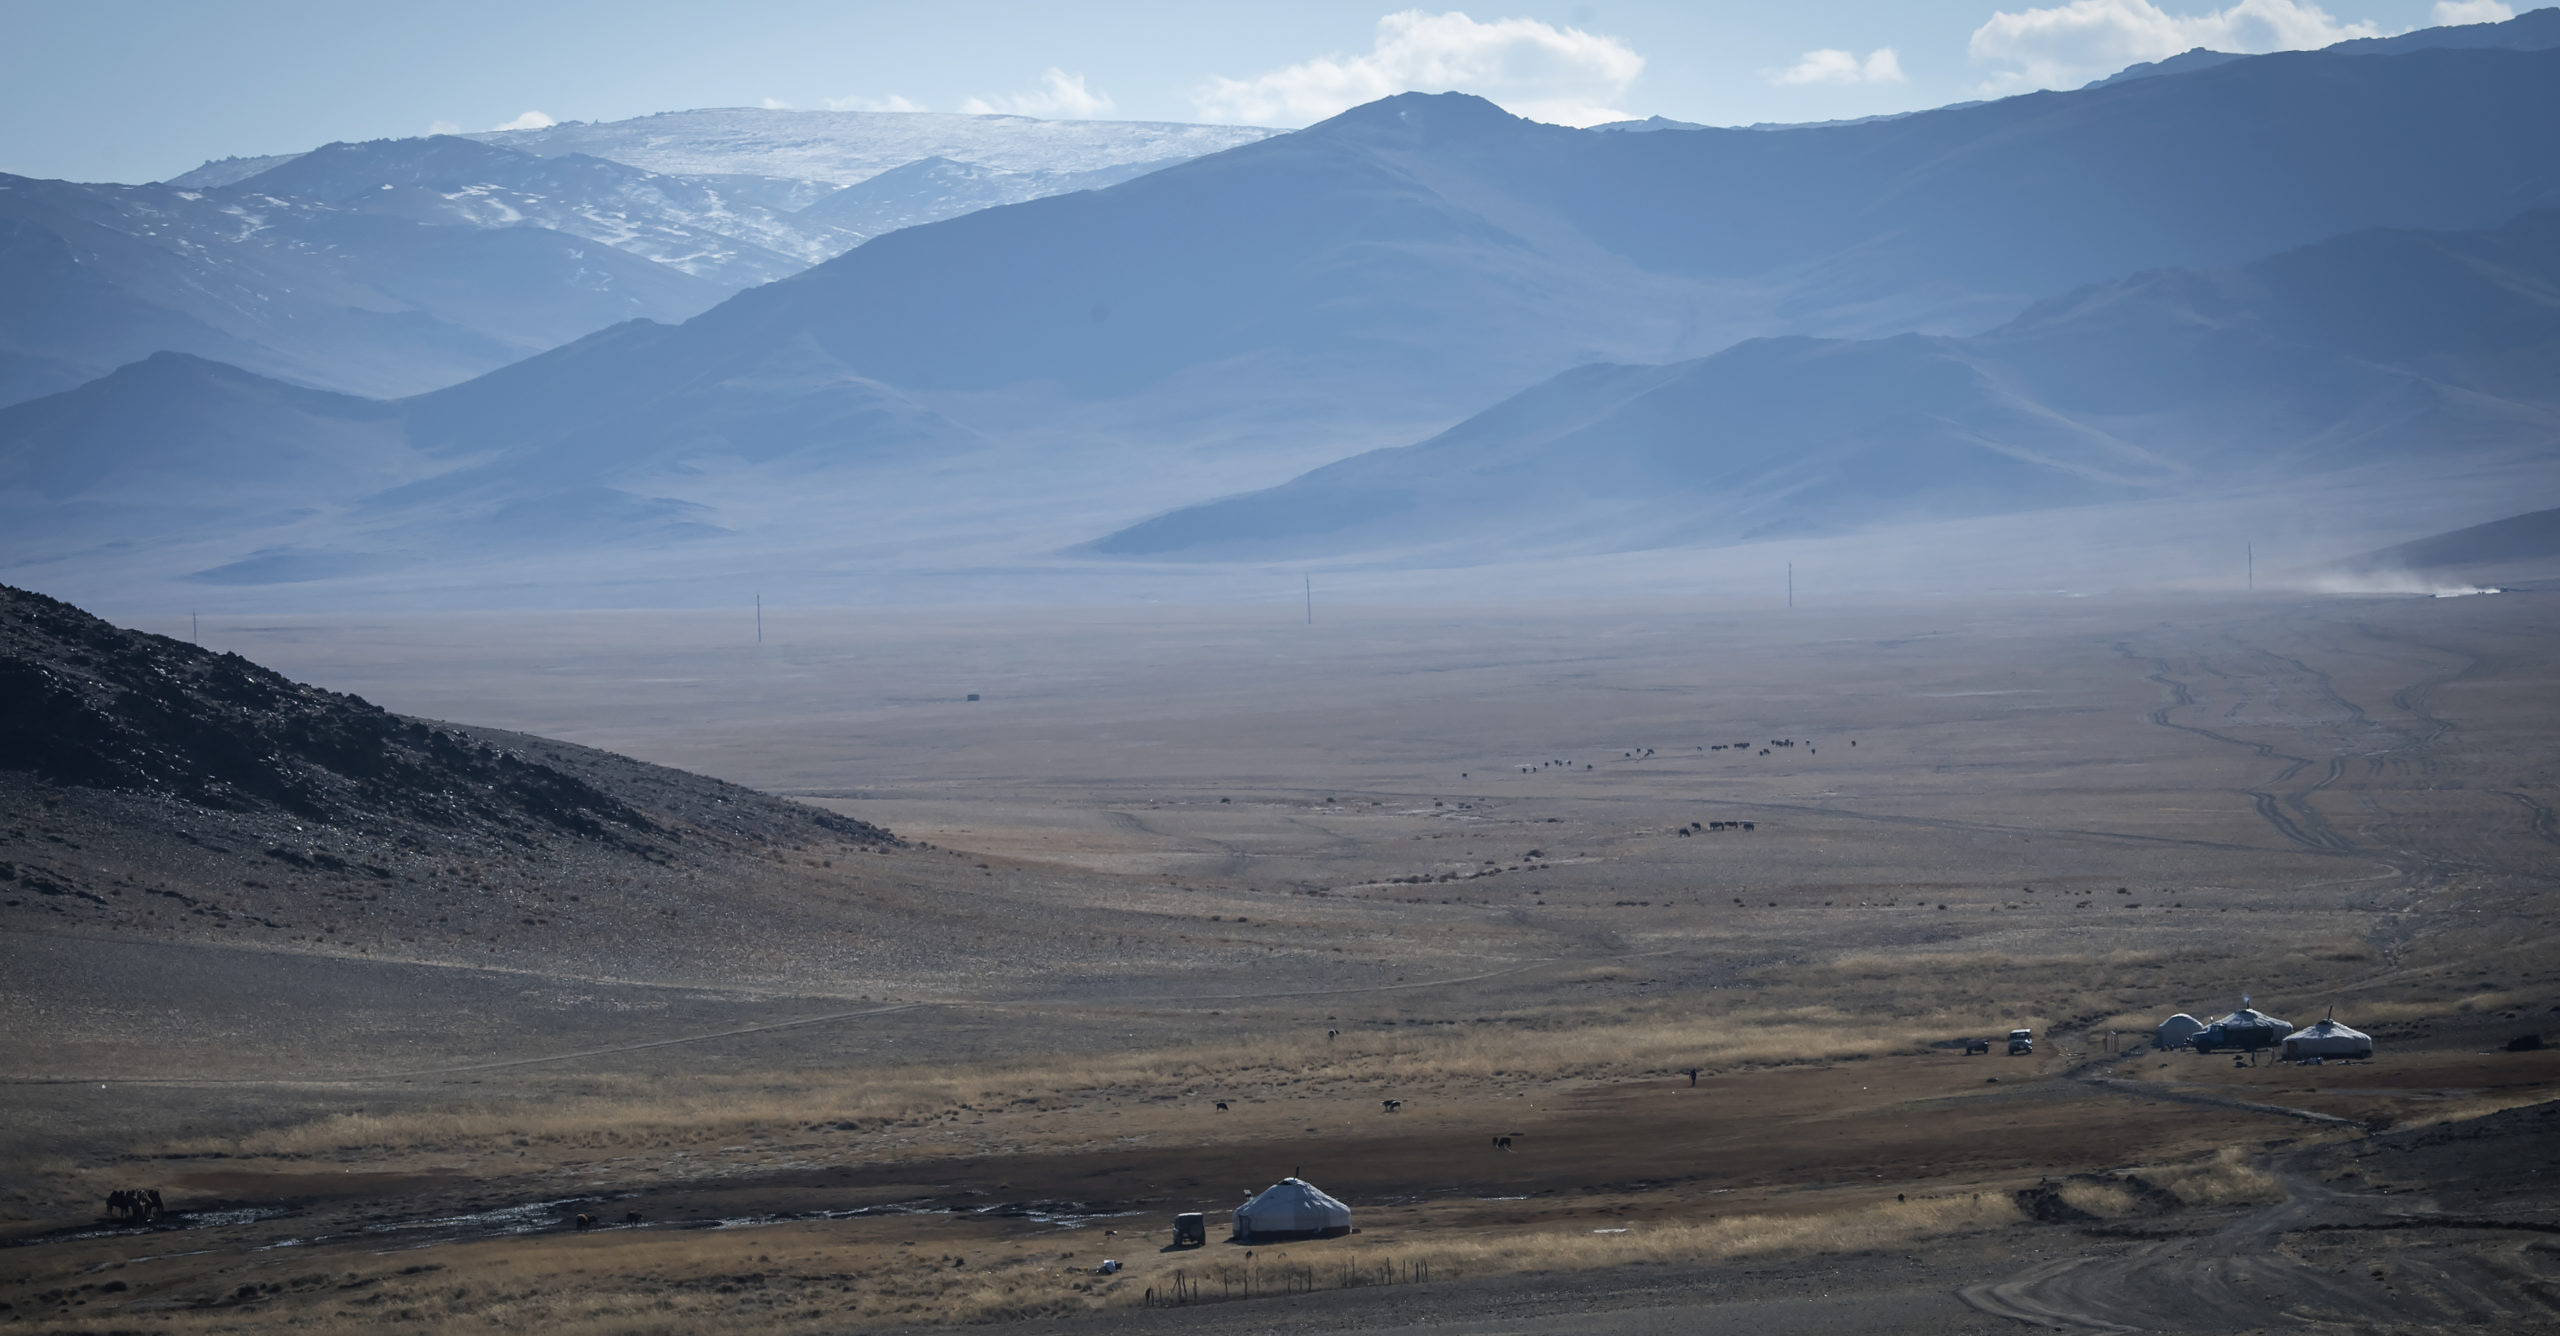 6.7.10.2018. Olgyi; Paysage des montagnes de l Altai vers OlgyiPhoto Jean-Guy Python